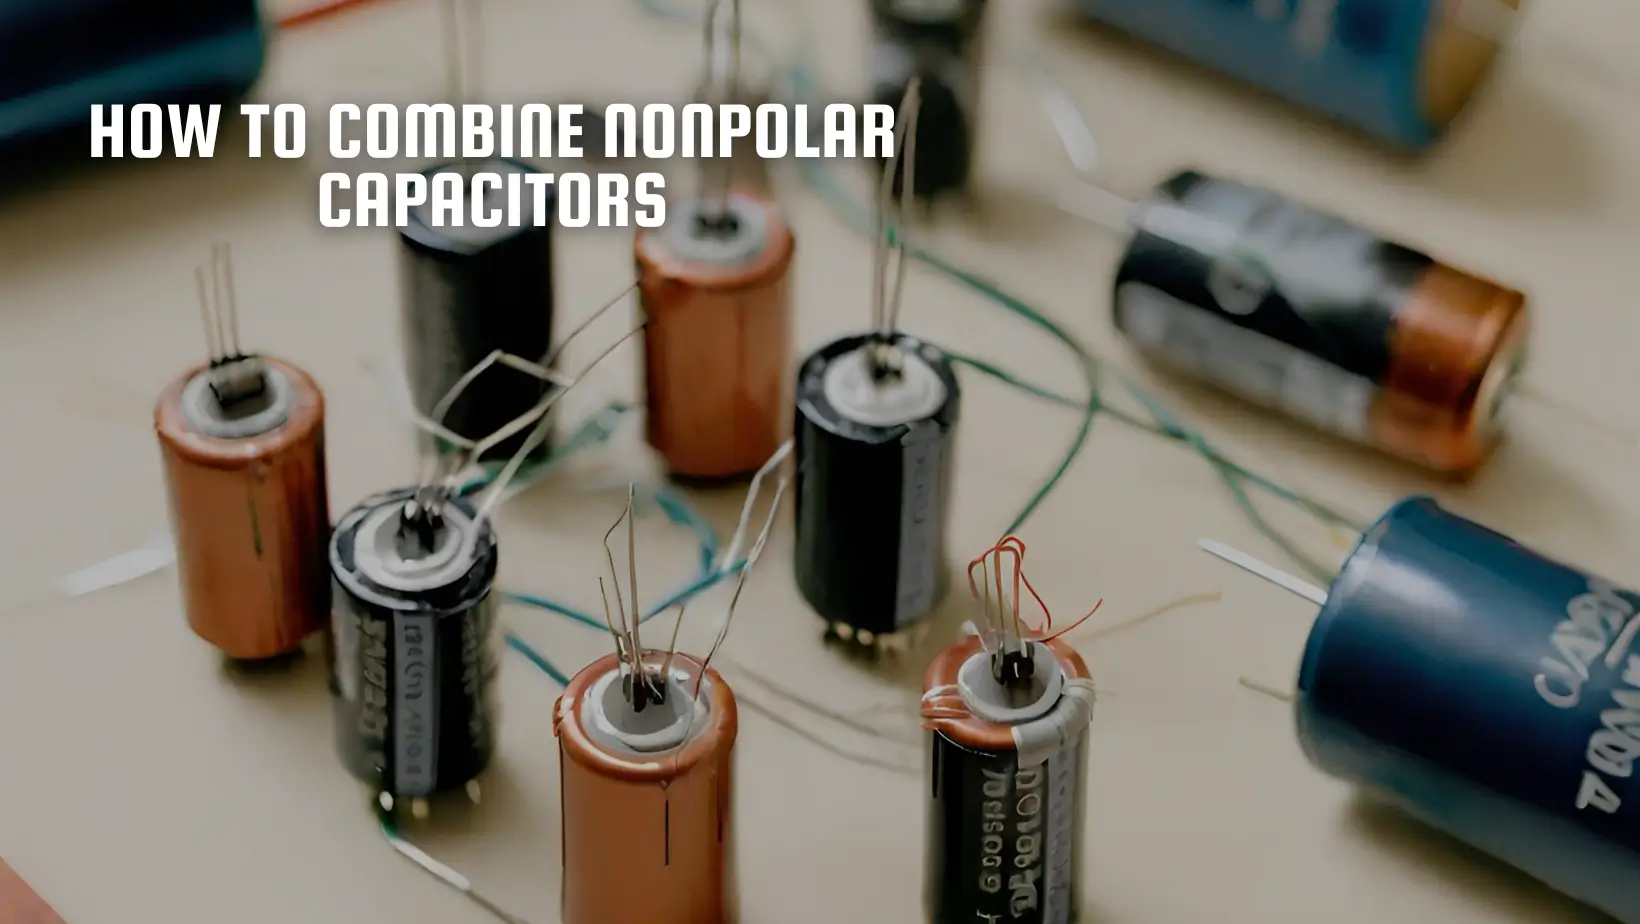 How to Combine Nonpolar Capacitors